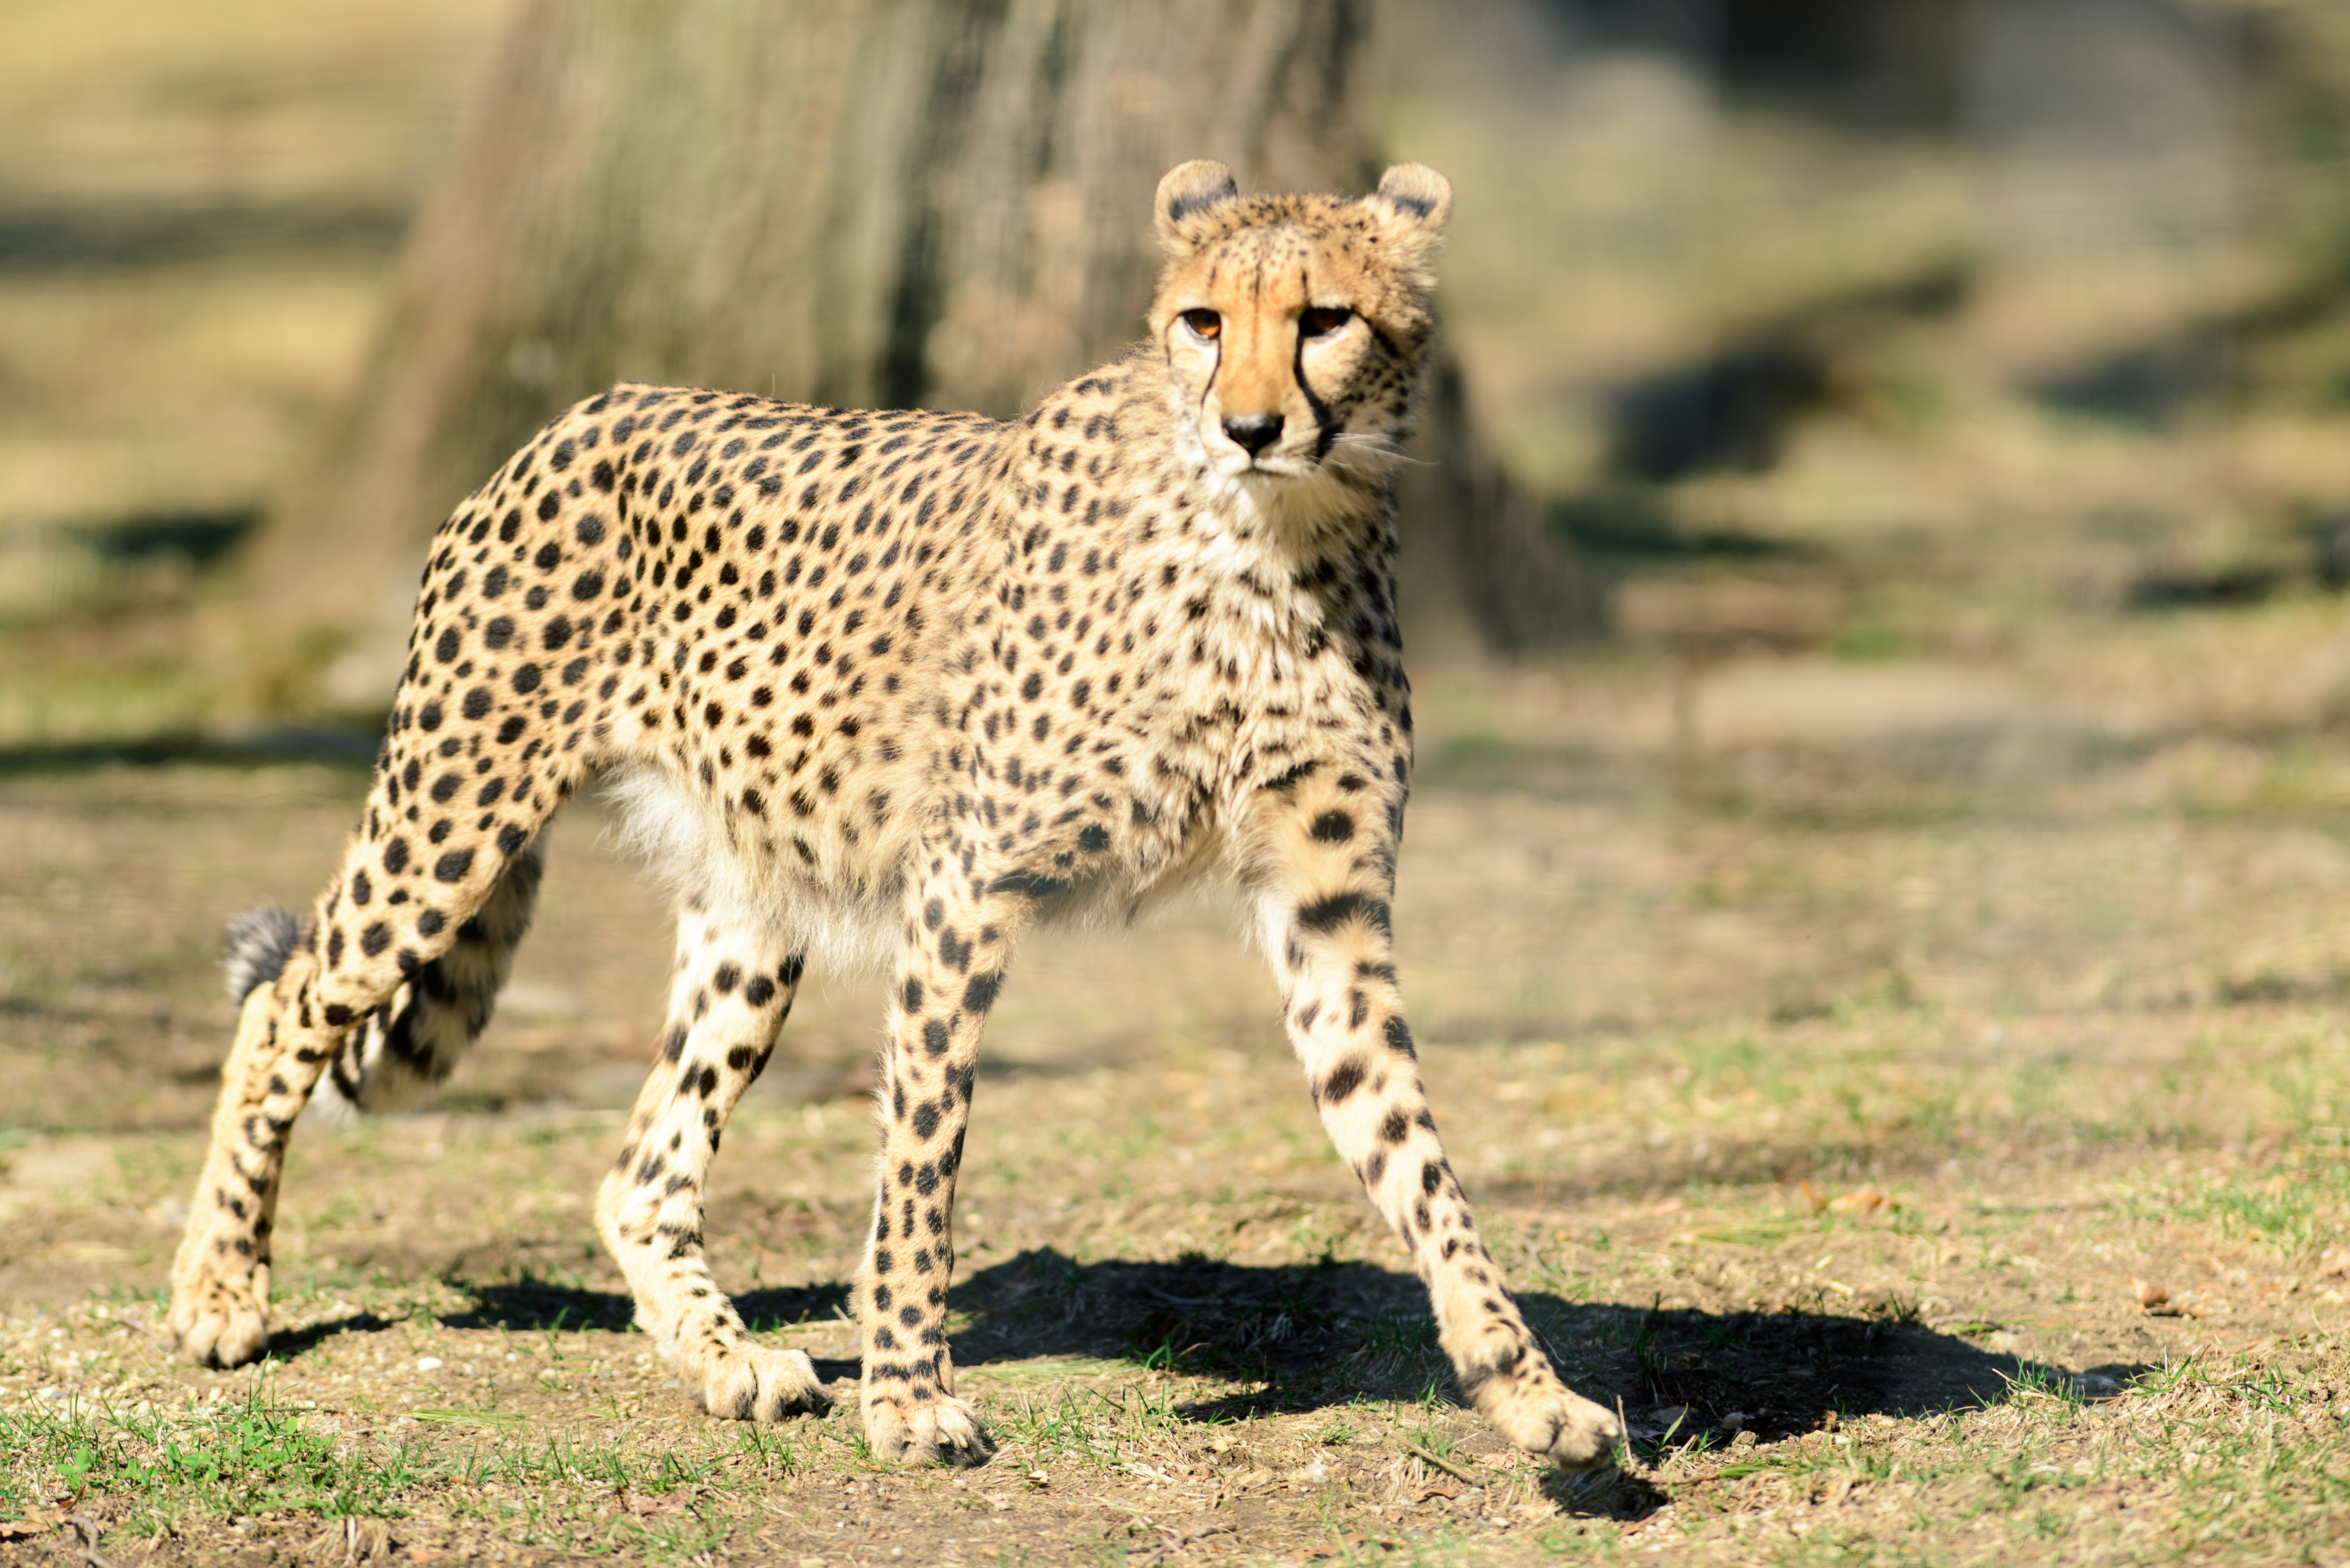 File:Cheetah Looking Alert (21386842443).jpg - Wikimedia Commons